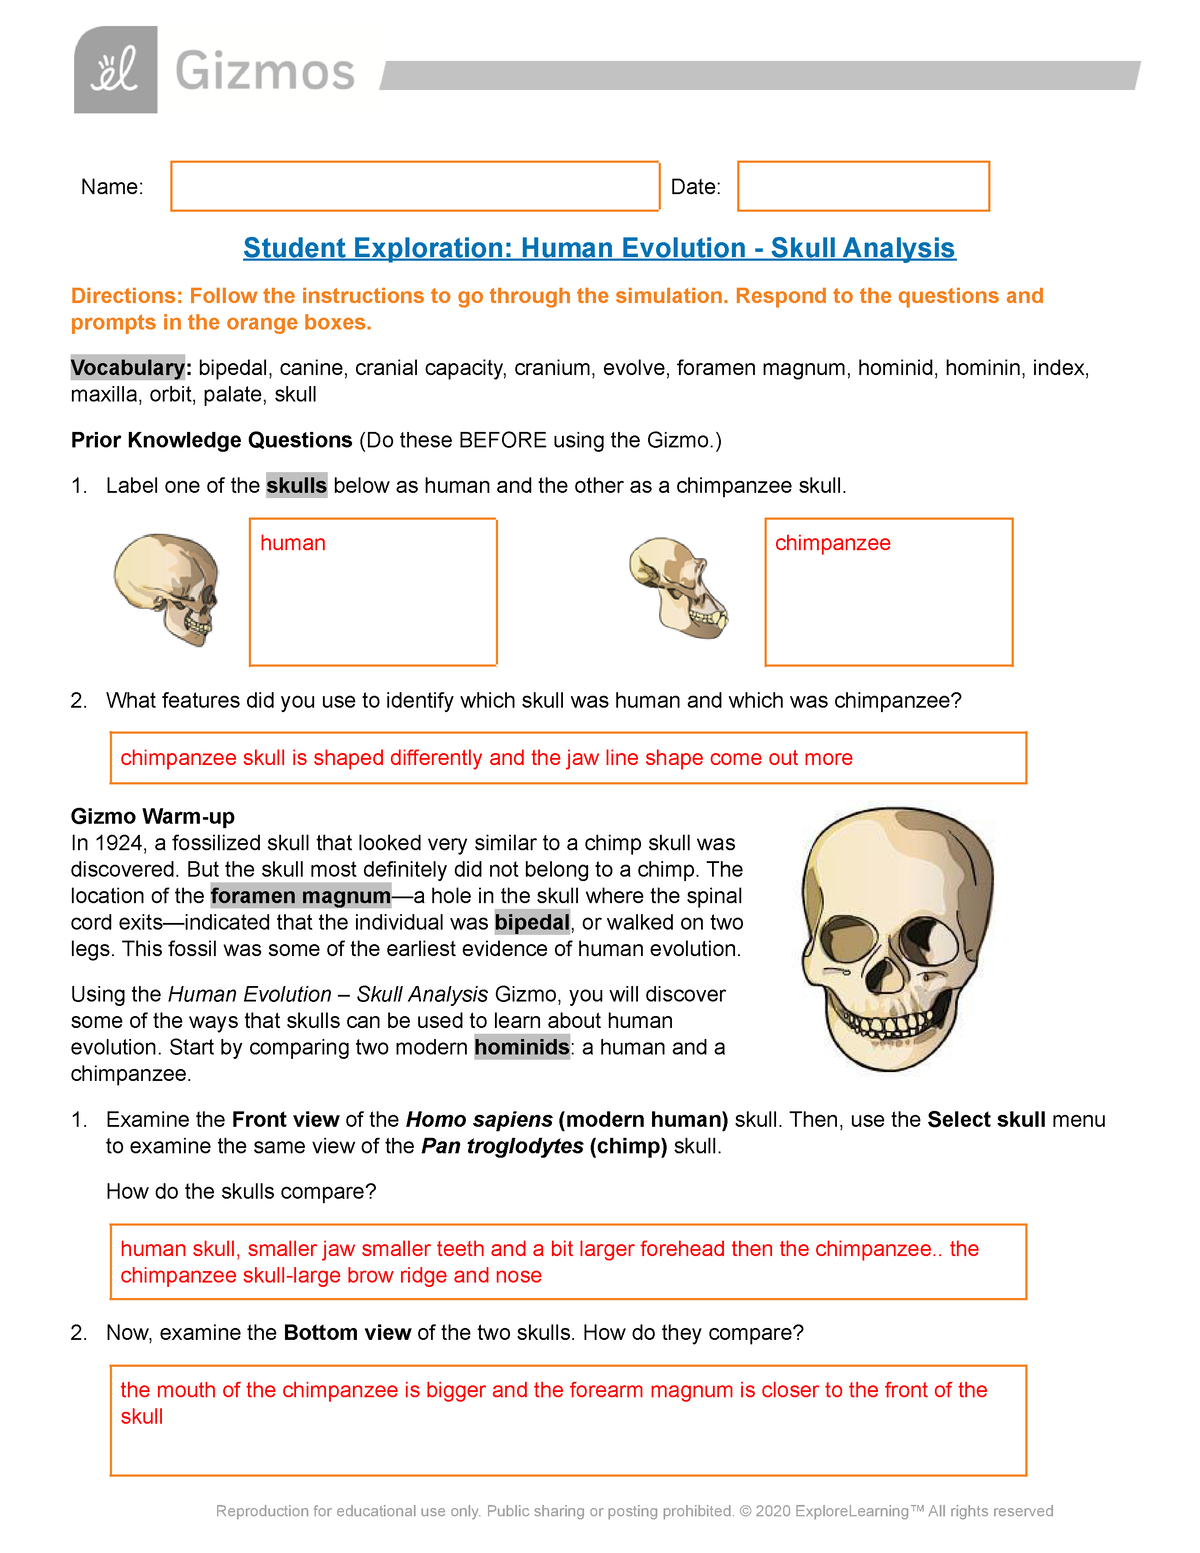 miguel-velazquez-gizmo-human-evolution-skull-analysis-7100524-name-date-student